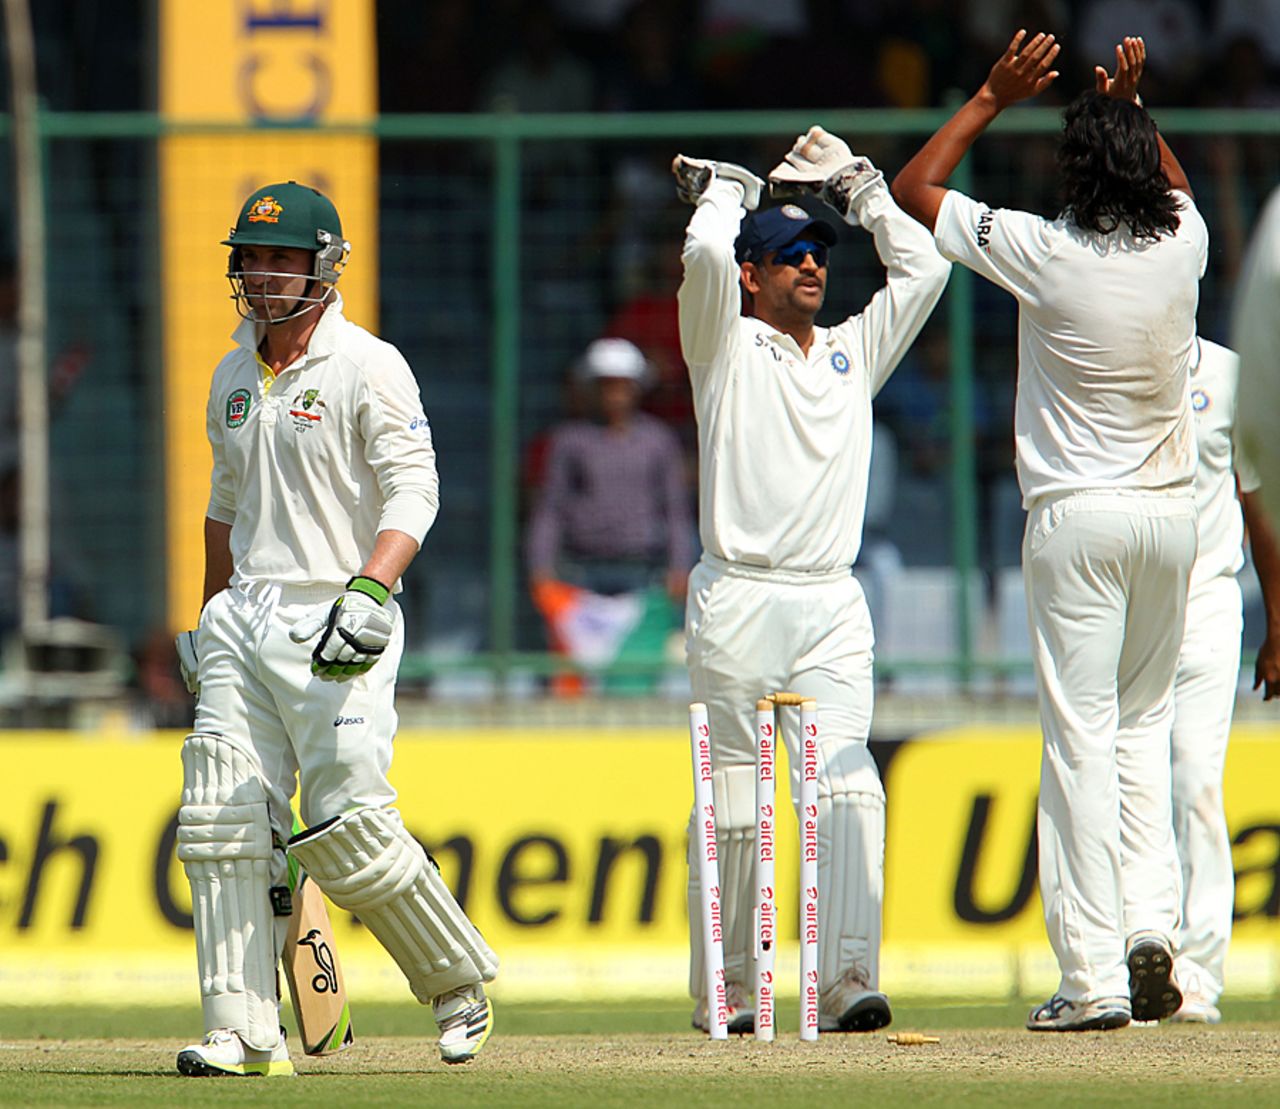 Phillip Hughes walks back after being bowled, India v Australia, 4th Test, Delhi, March 22, 2013